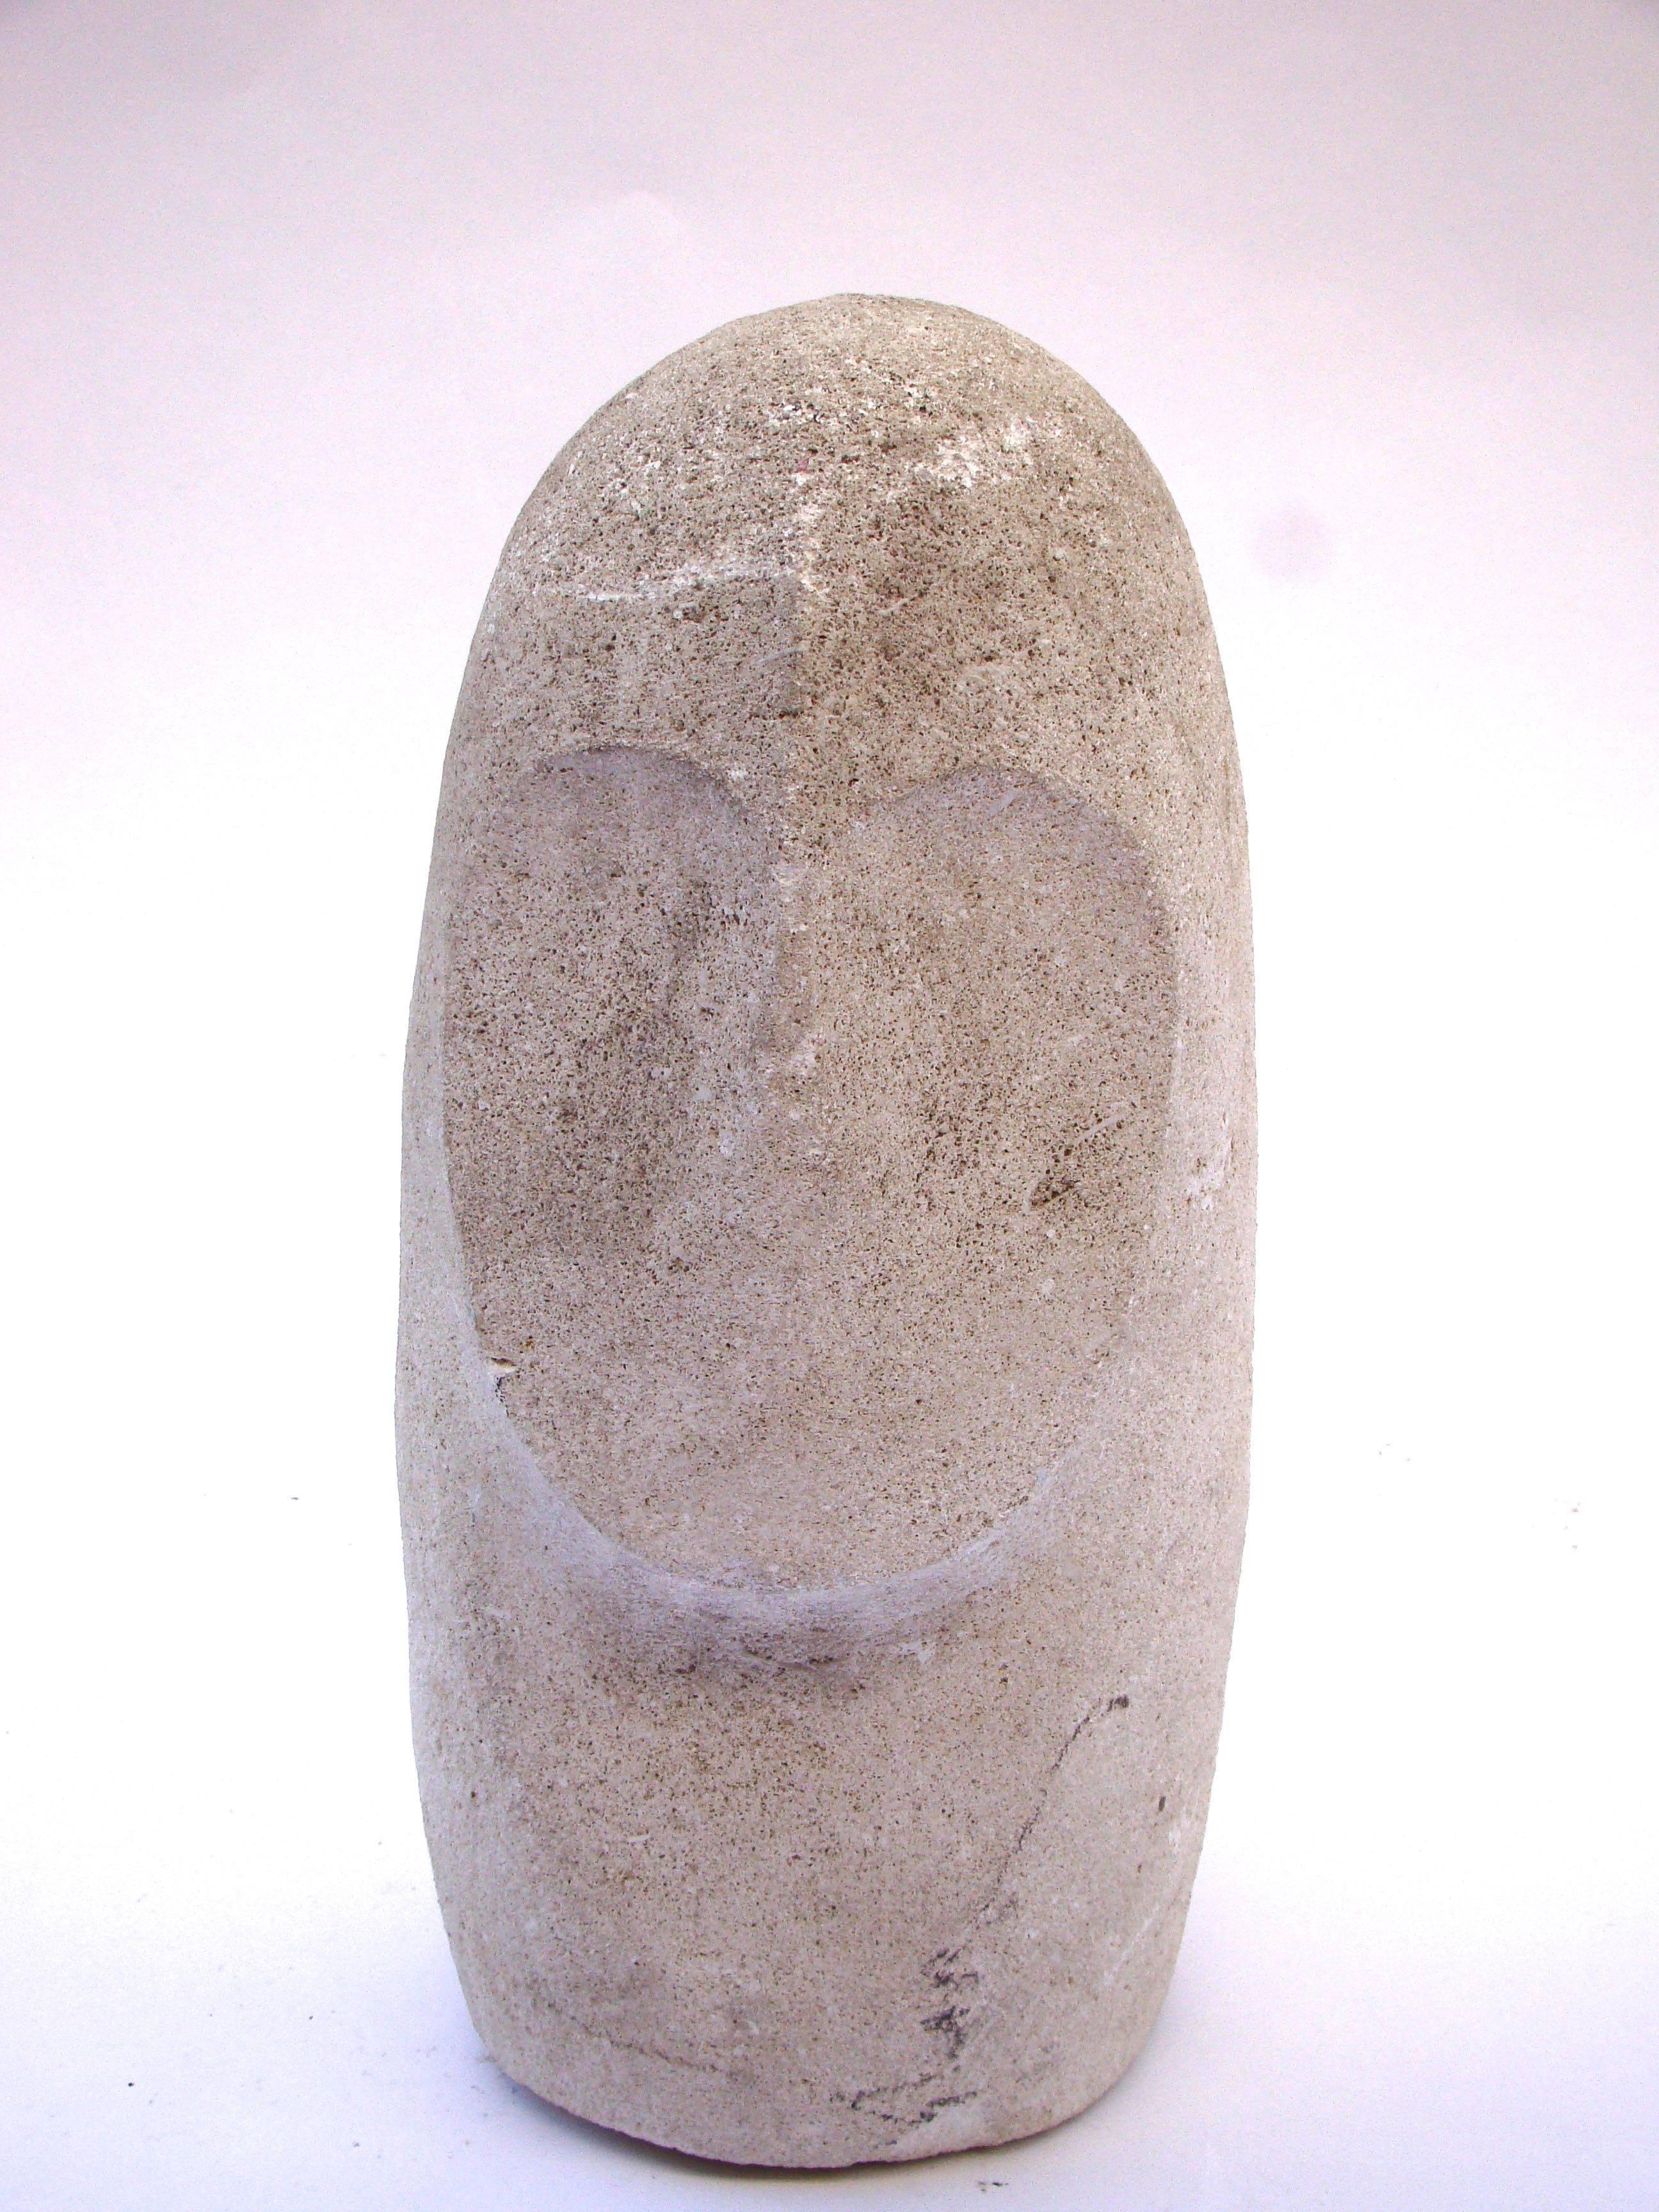 Original sculpture representing a Minimalist/abstract face in stone material, circa 1960-1970.